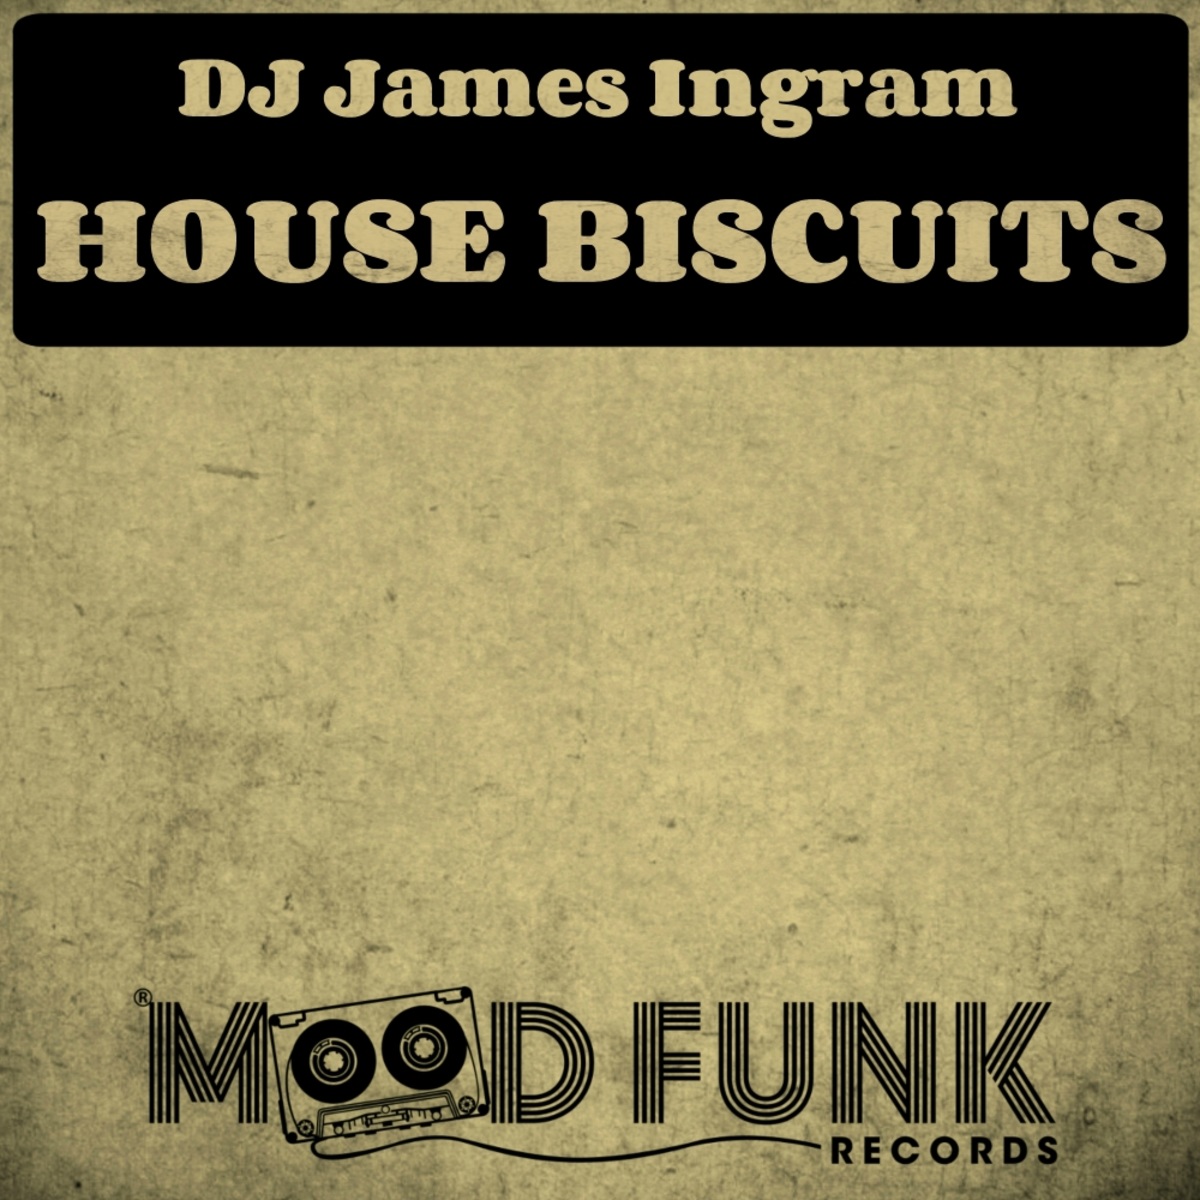 DJ James Ingram - House Biscuits / Mood Funk Records